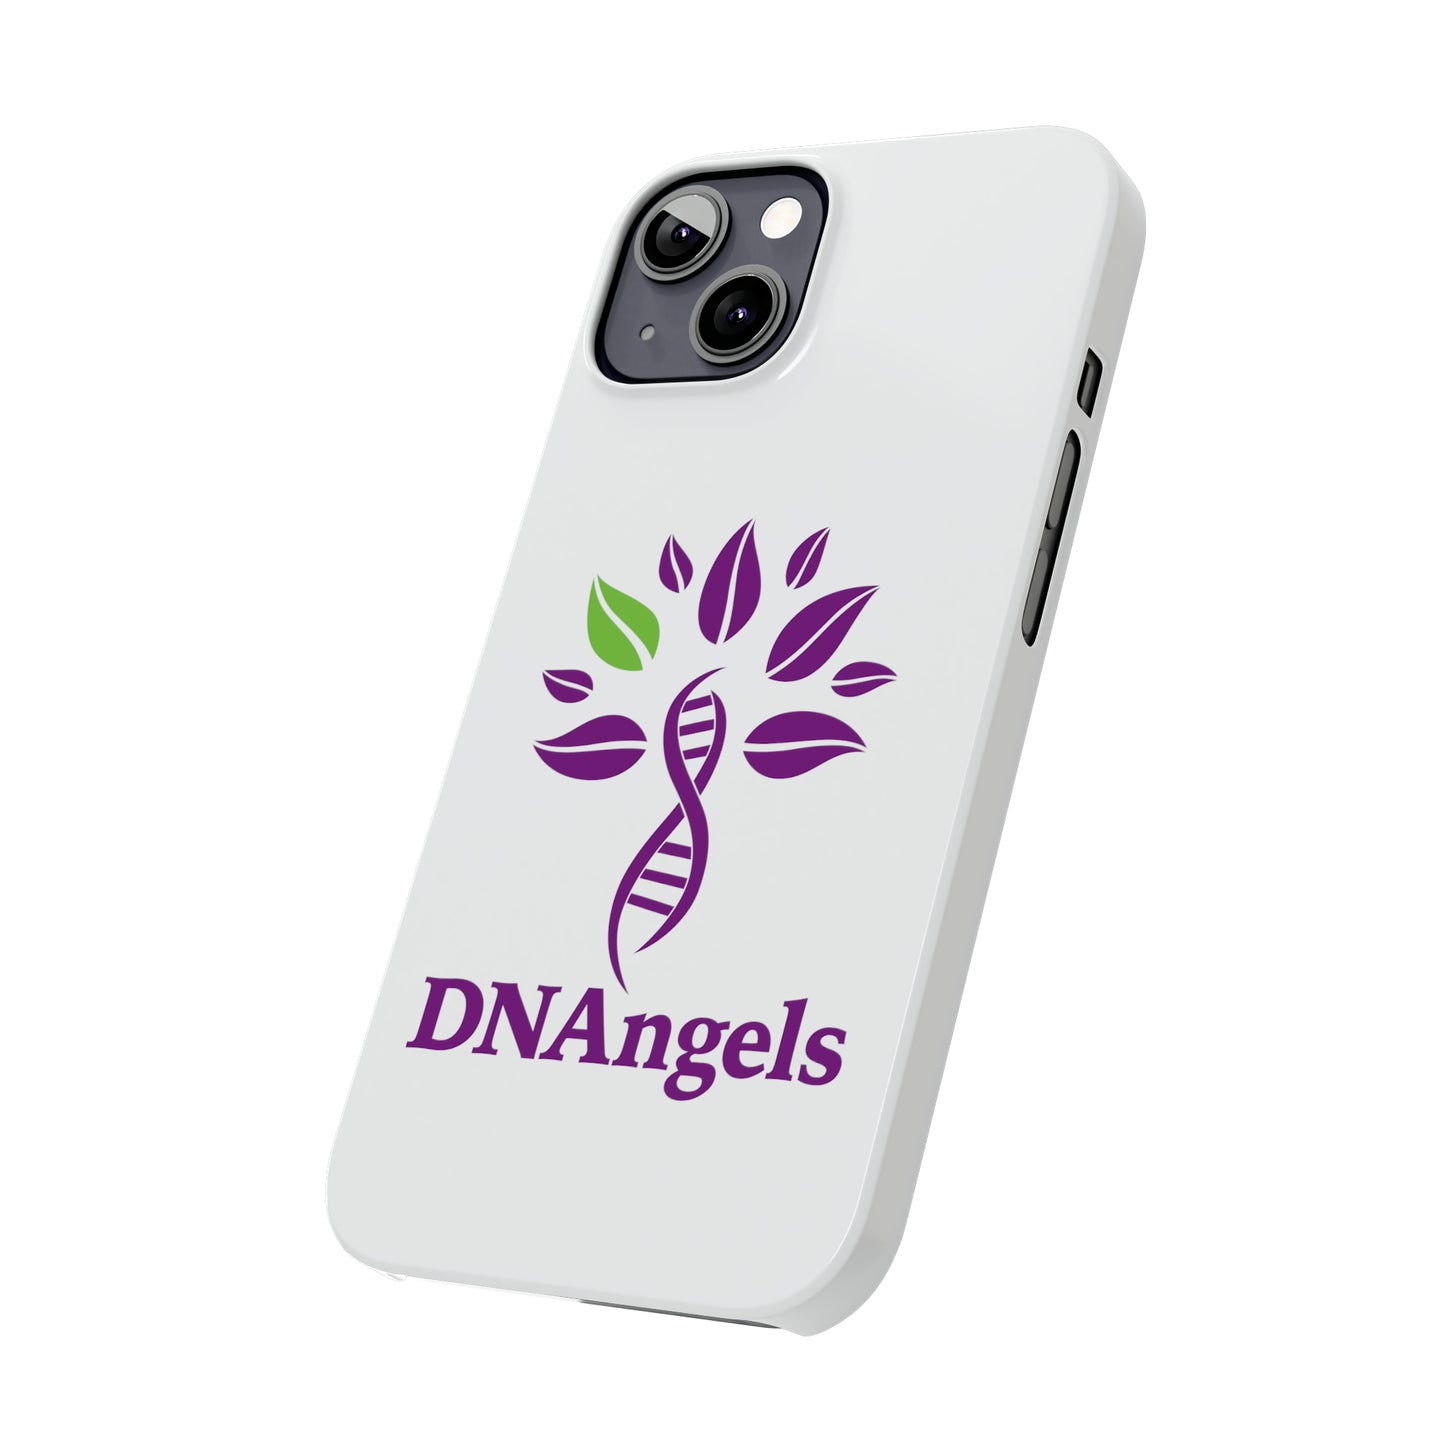 DNAngels Slim iPhone Case